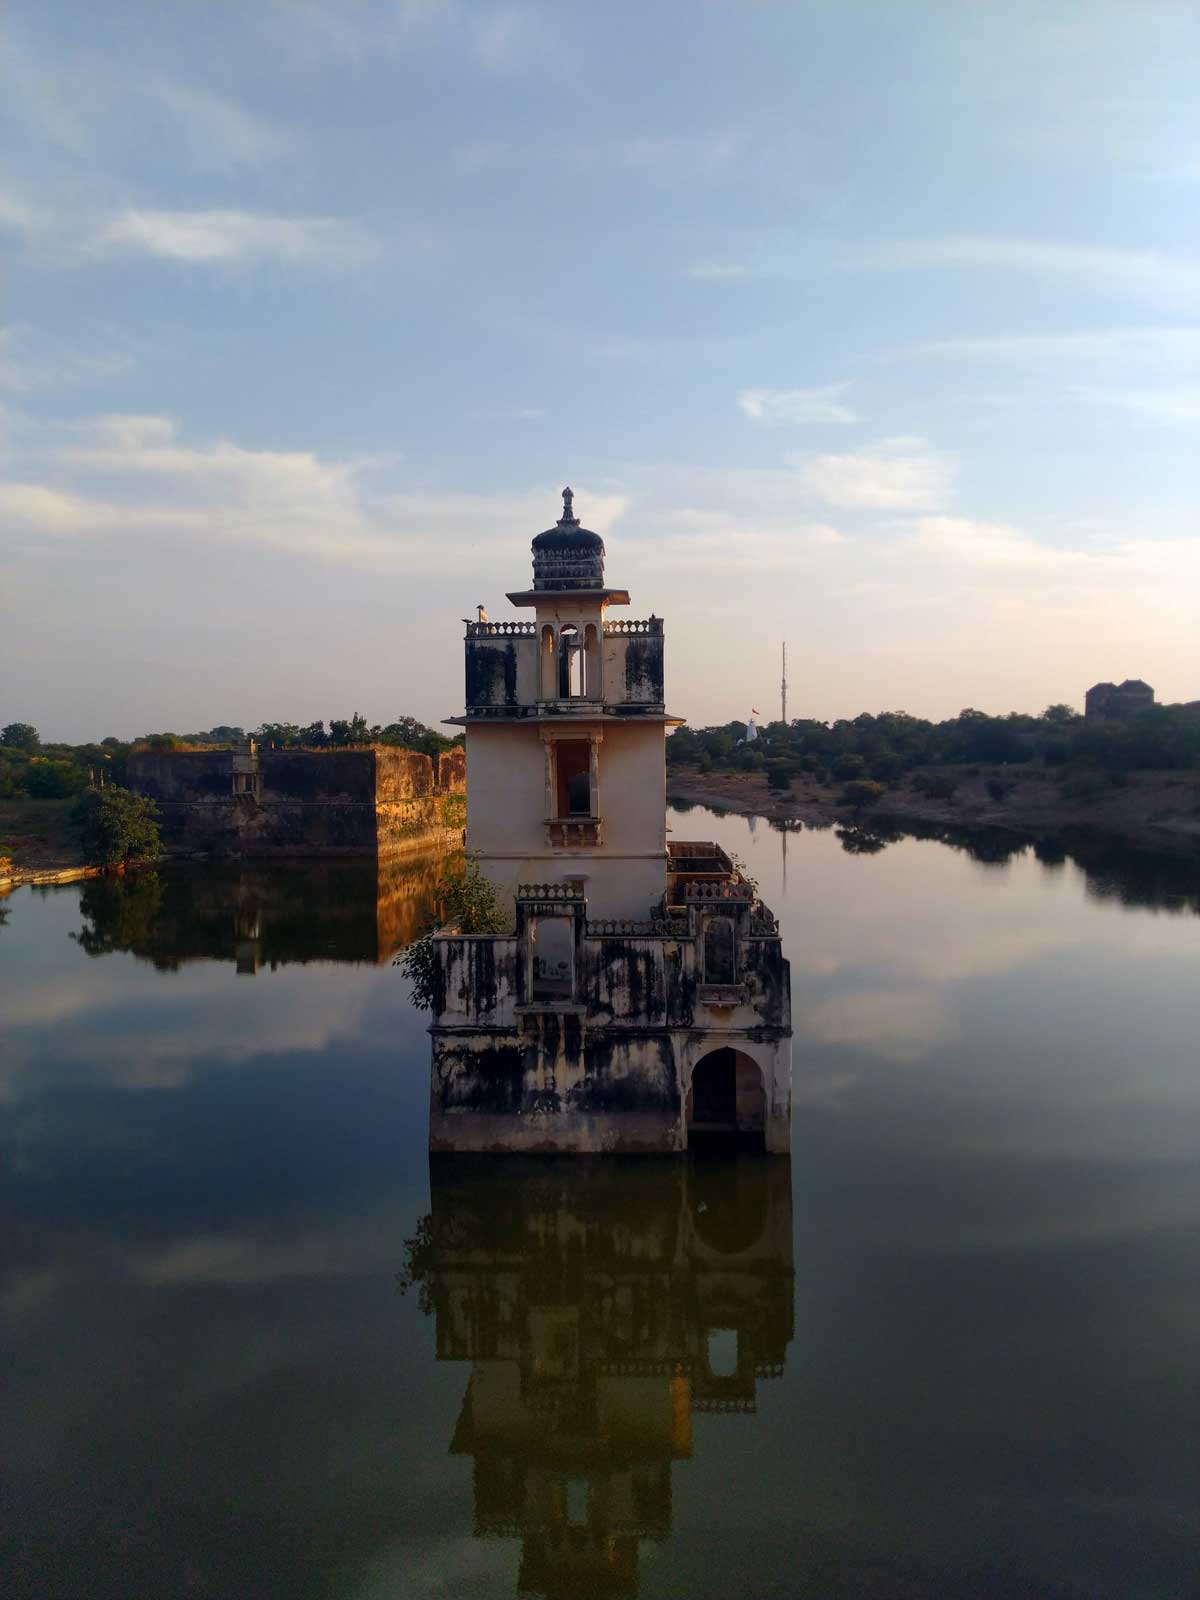 Fateh Singh Palace - Chittorgarh